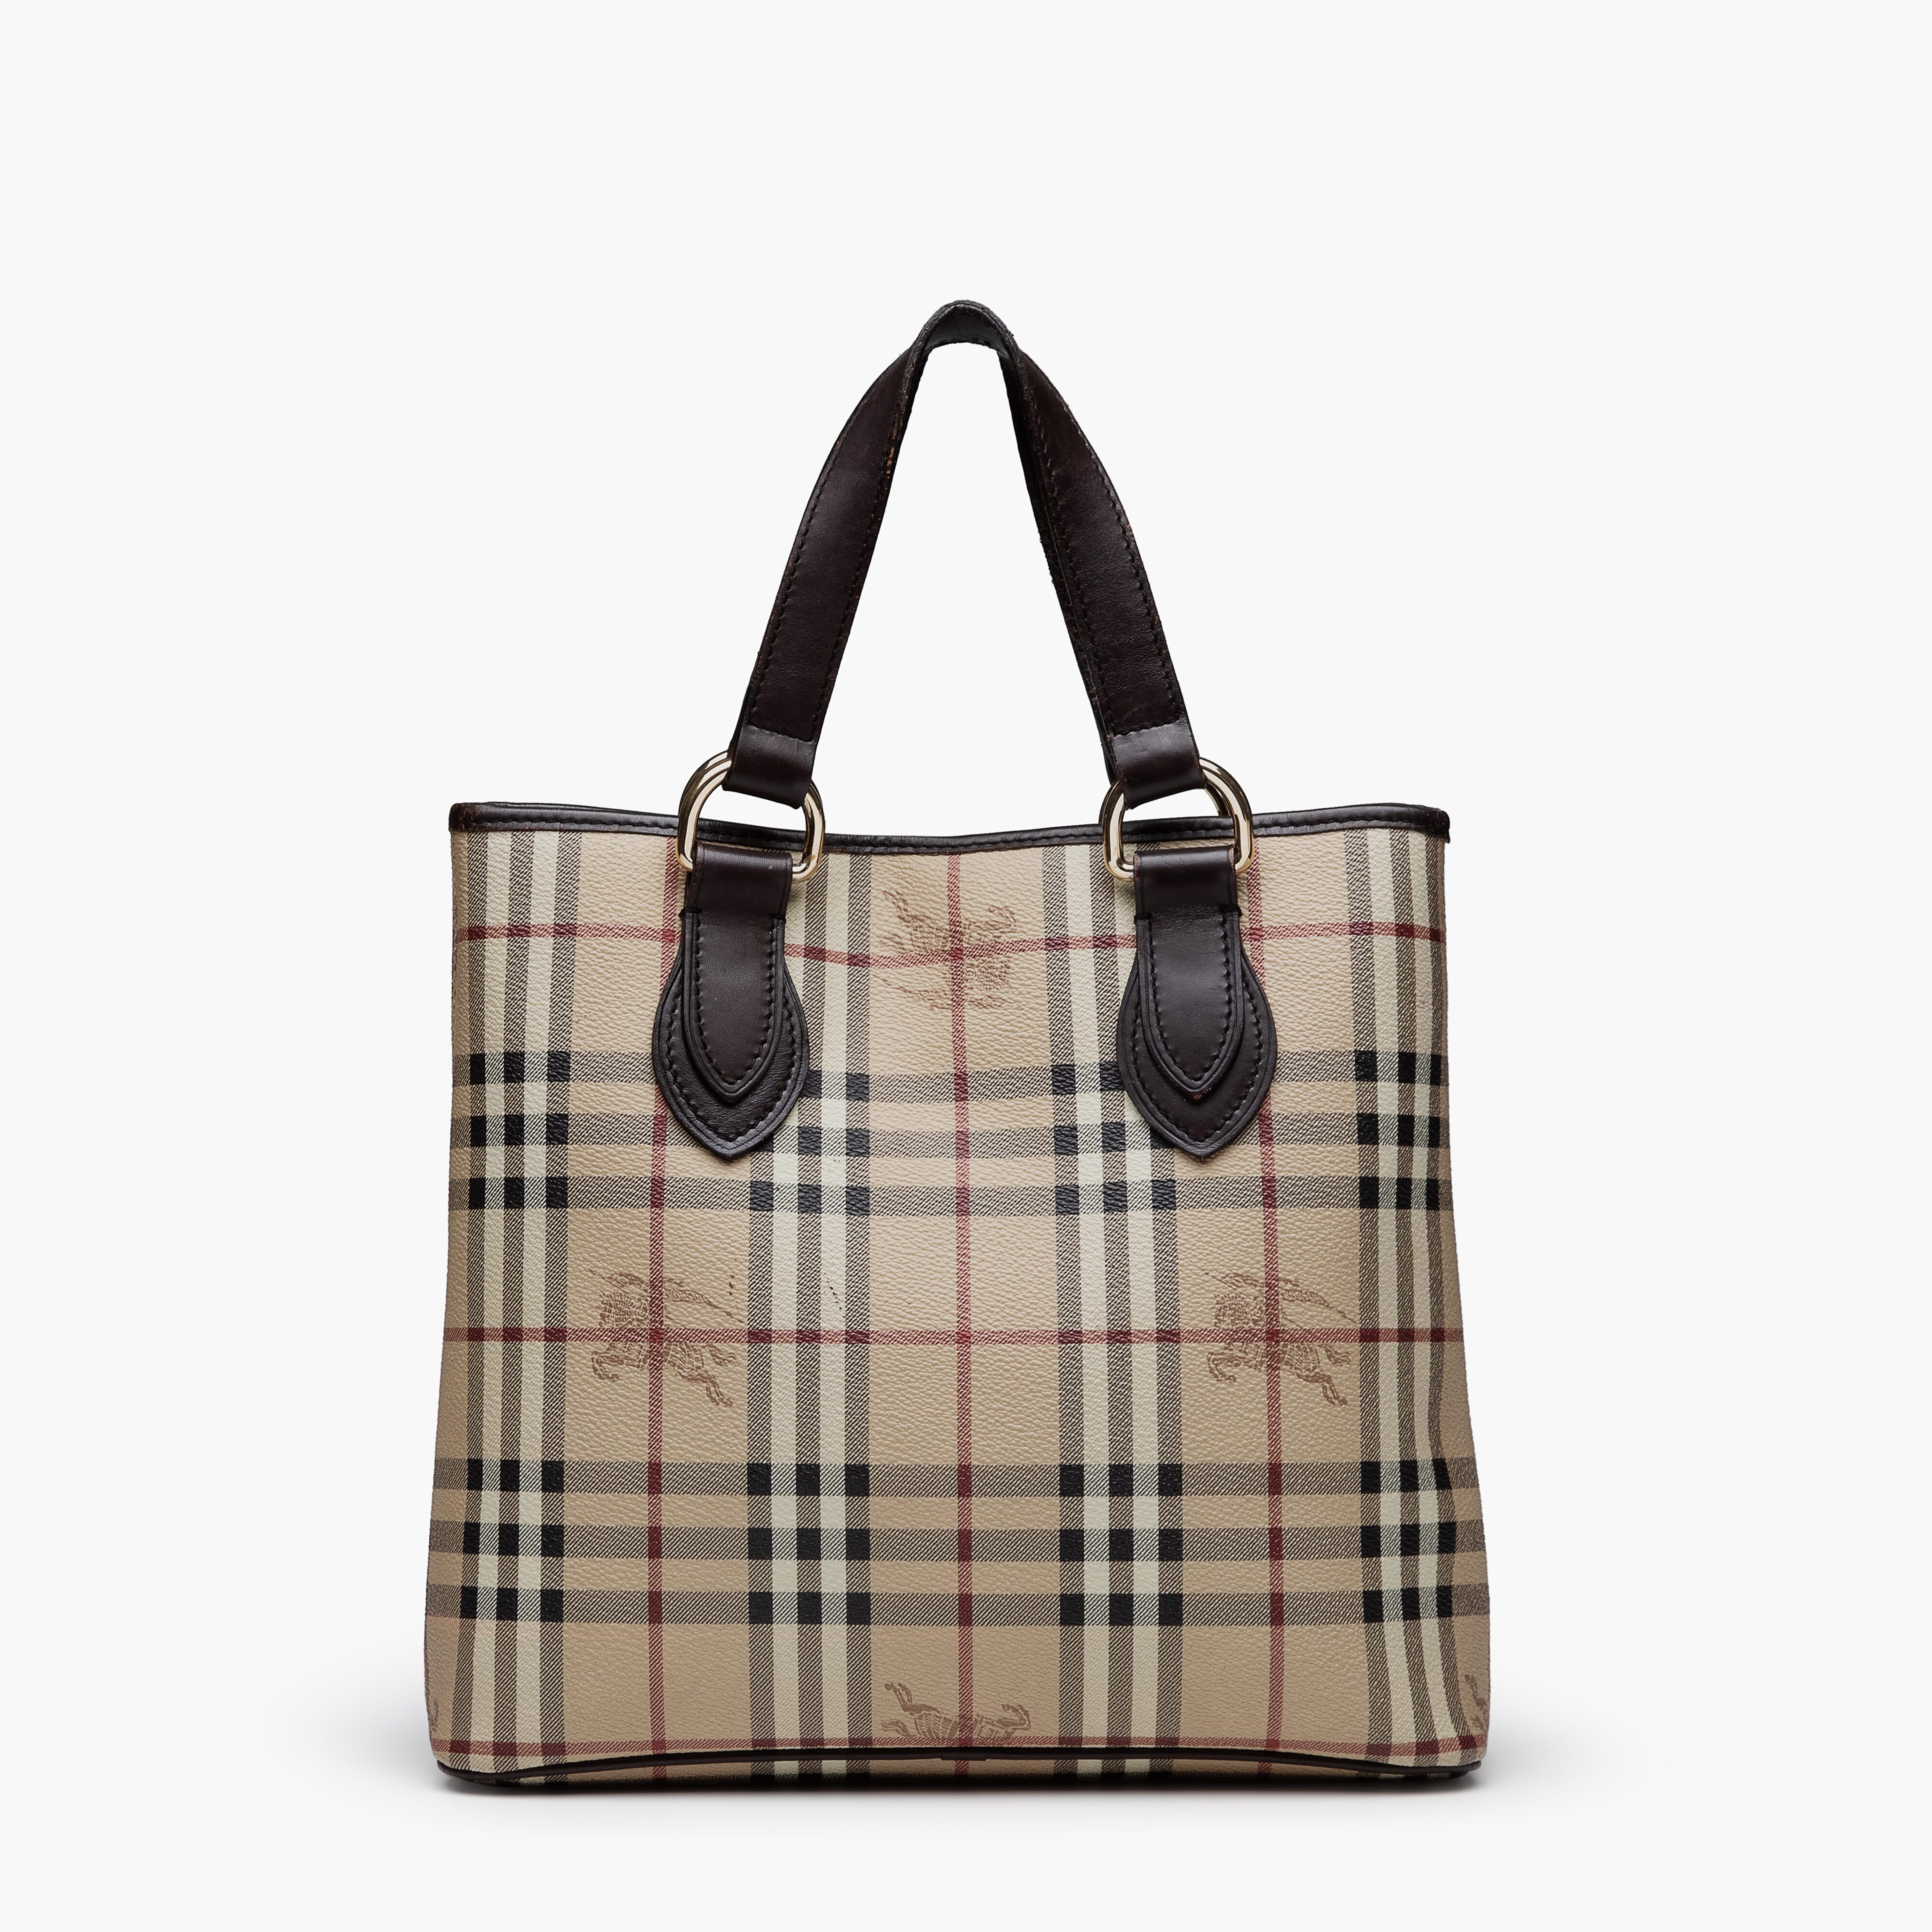 Shop – Panache Handbags